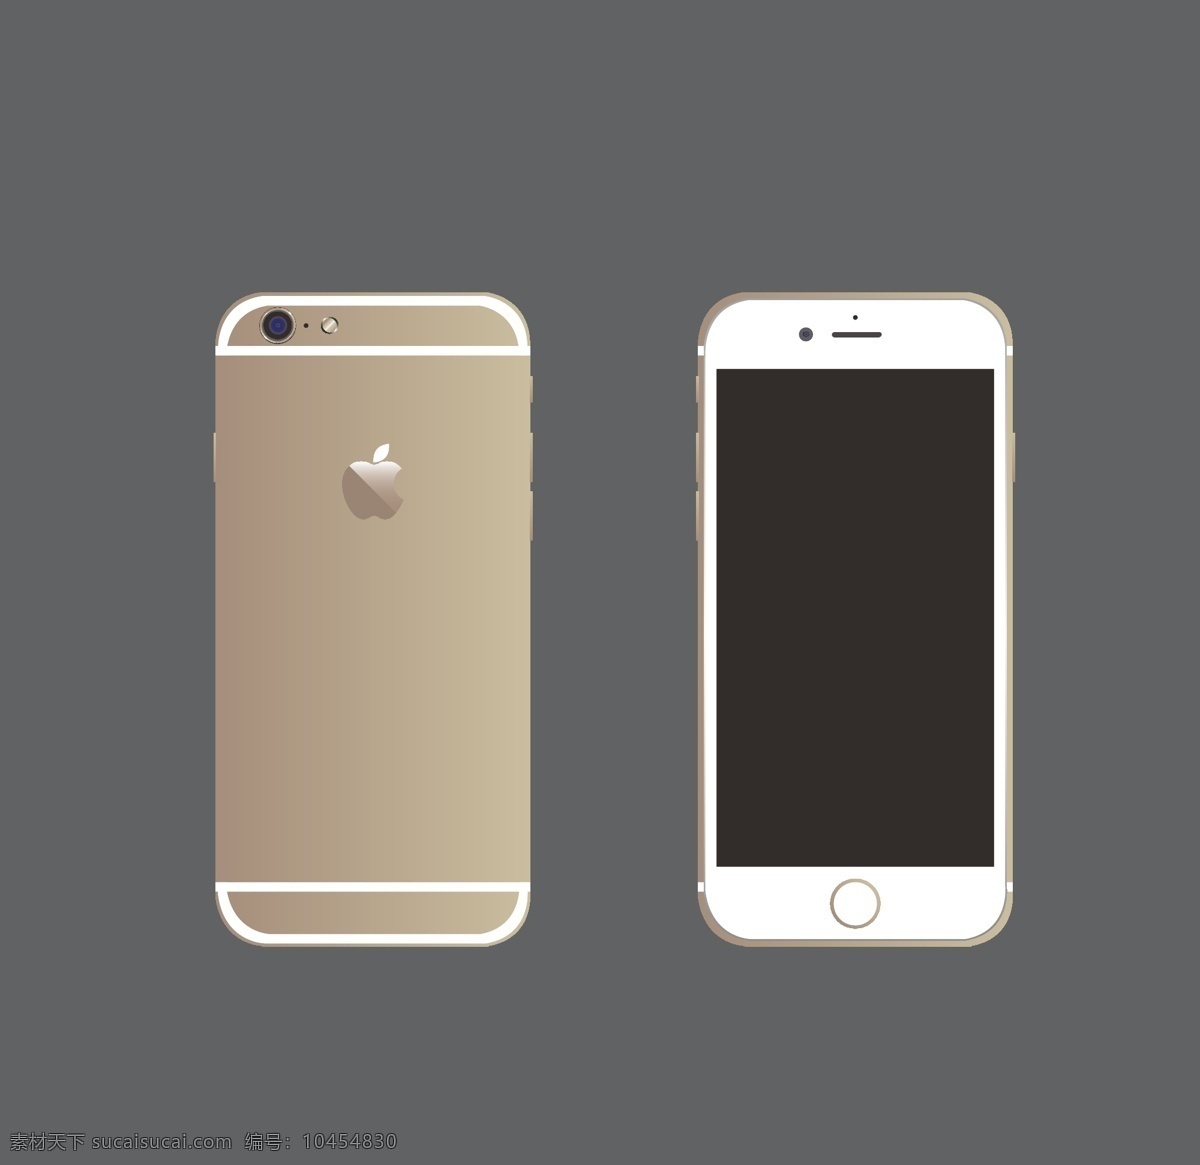 iphone6s 土豪 金 矢量图 模型 iphone 平面图 6s平面图 6s手机 背景图 现代科技 数码产品 灰色